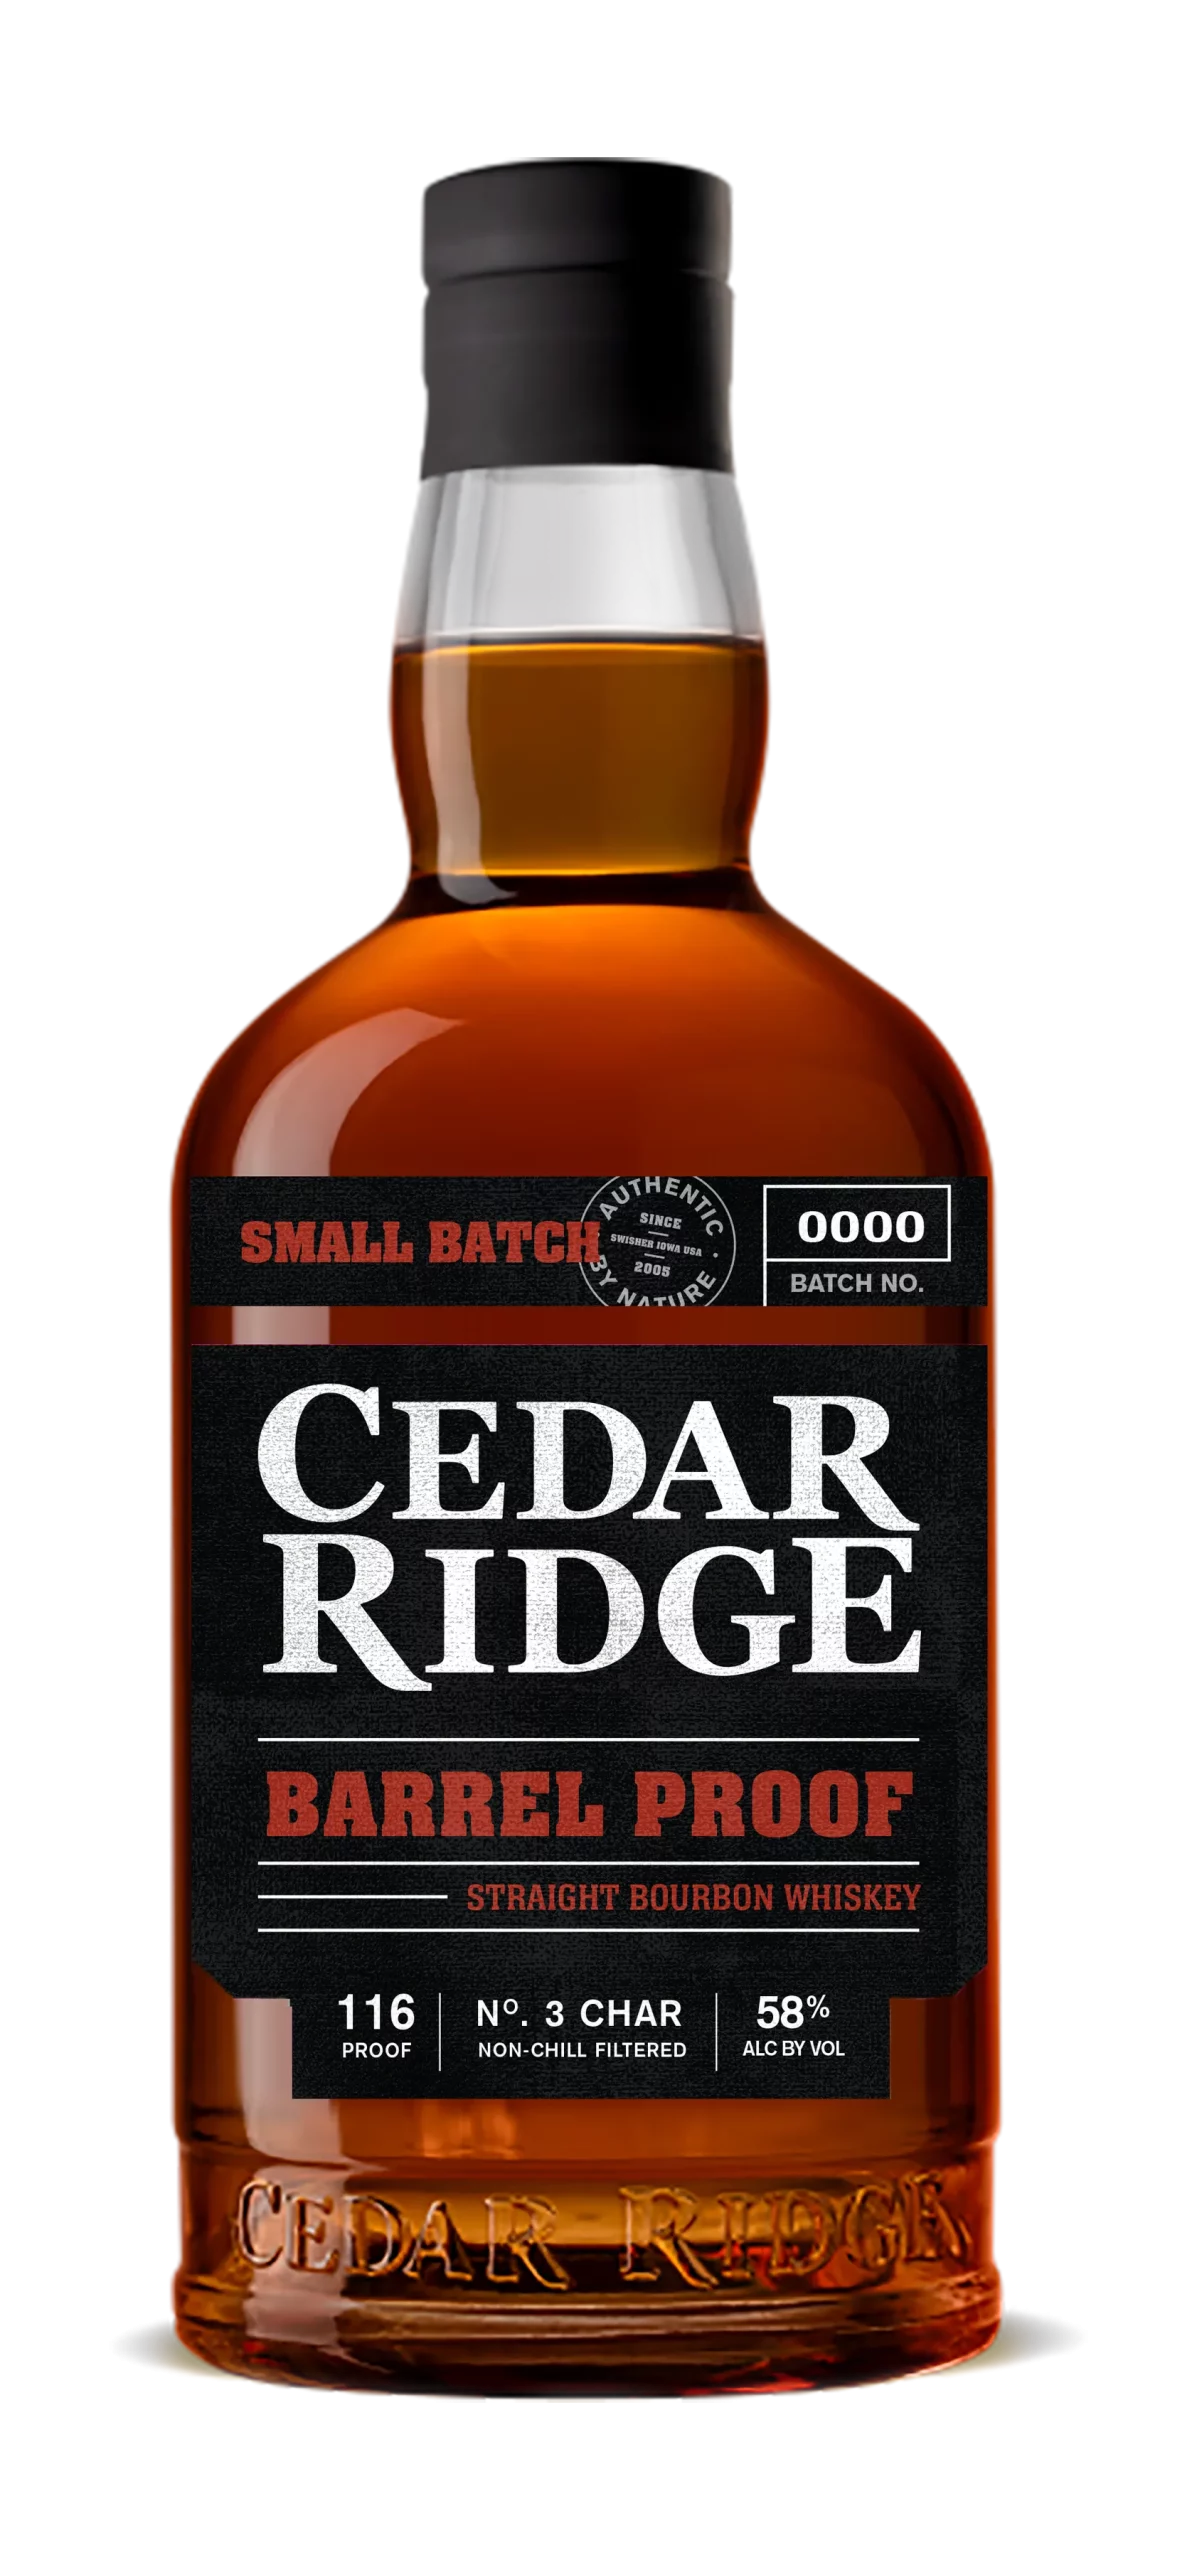 Cedar Ridge Barrel Proof Whiskey